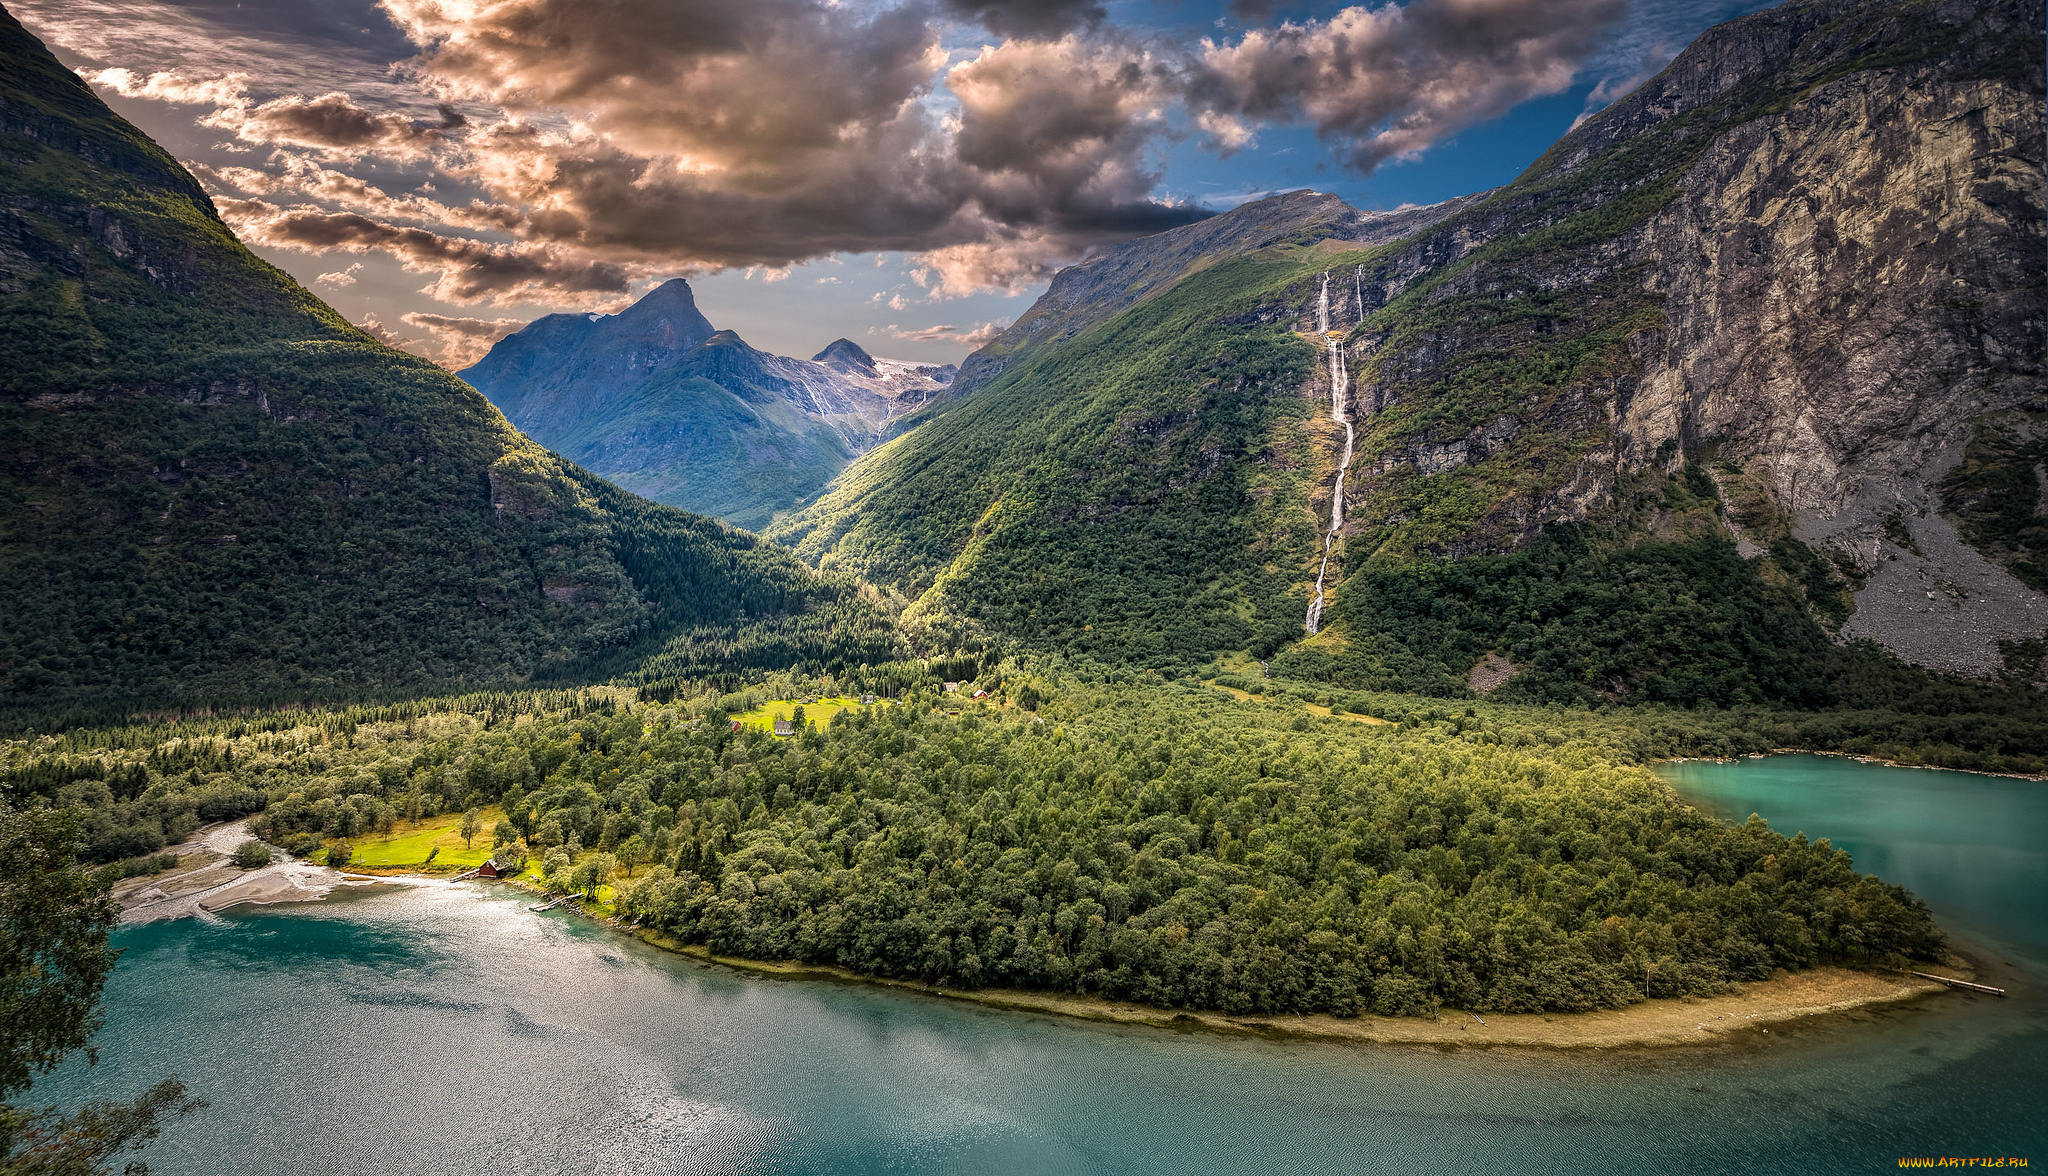 природа, реки, озера, озеро, облака, согн-ог-фьюране, викaн, norway, sogn, og, fjordane, vikane, панорама, горы, долина, норвегия